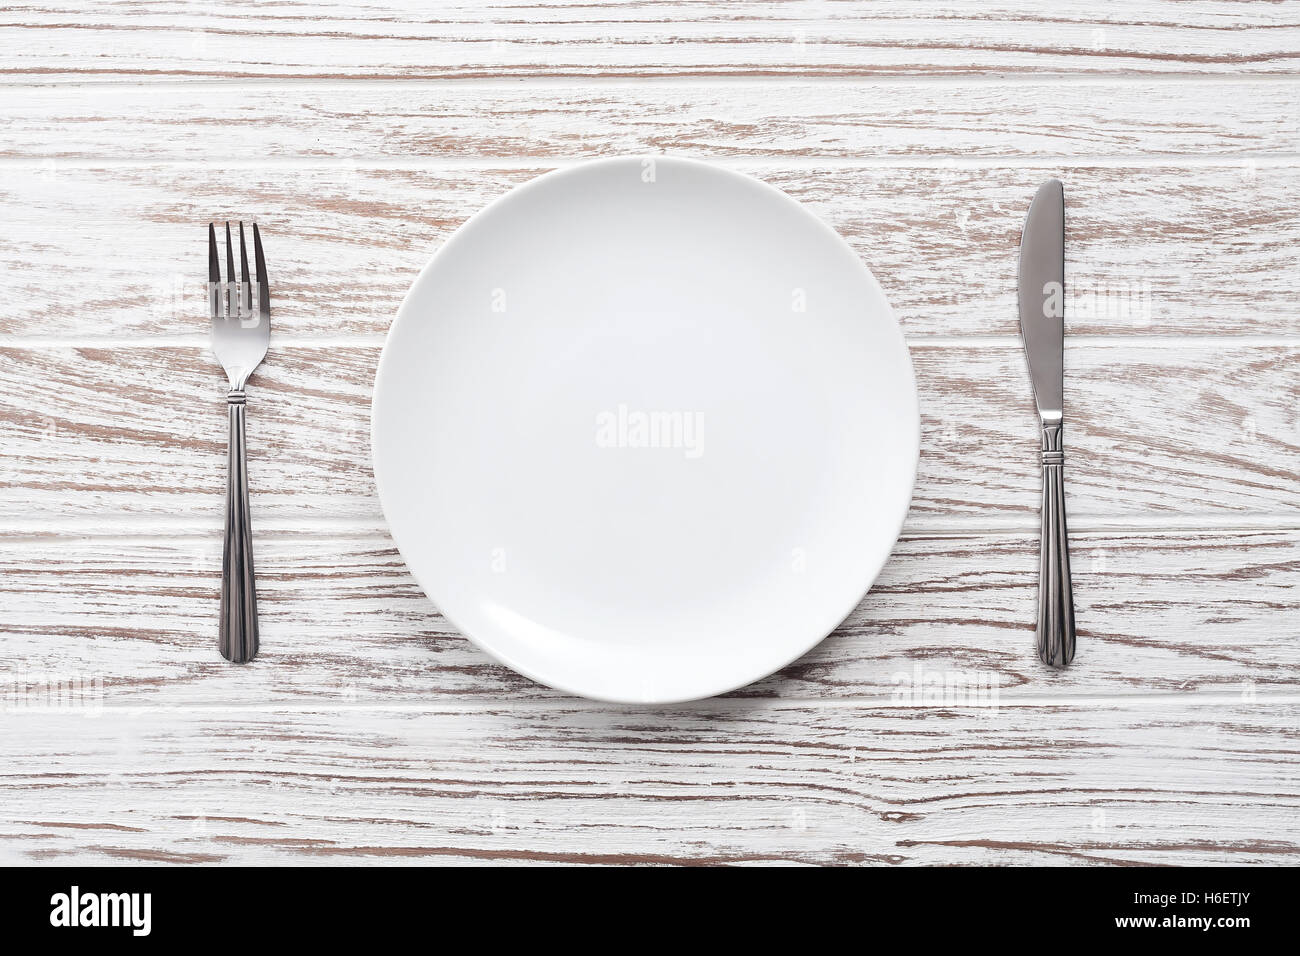 empty plate fork knife silverware white wooden table background still ...